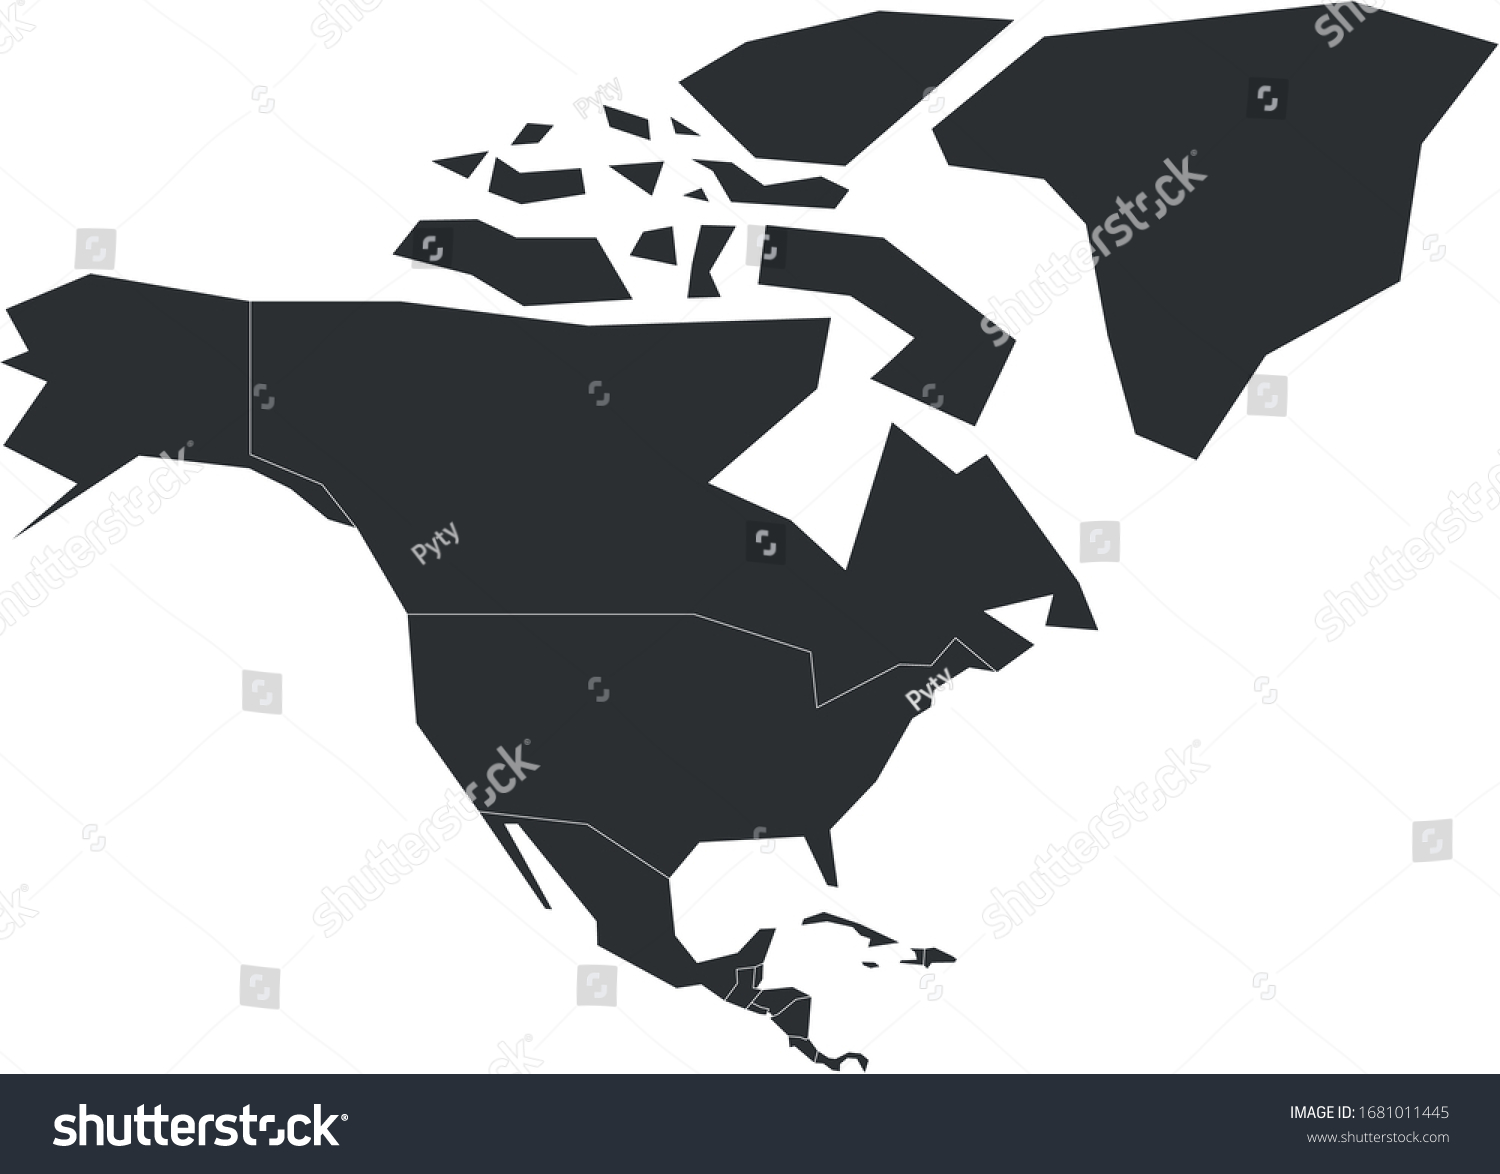 Stock Vector Blank Grey Political Map Of North America Vector Illustration 1681011445 